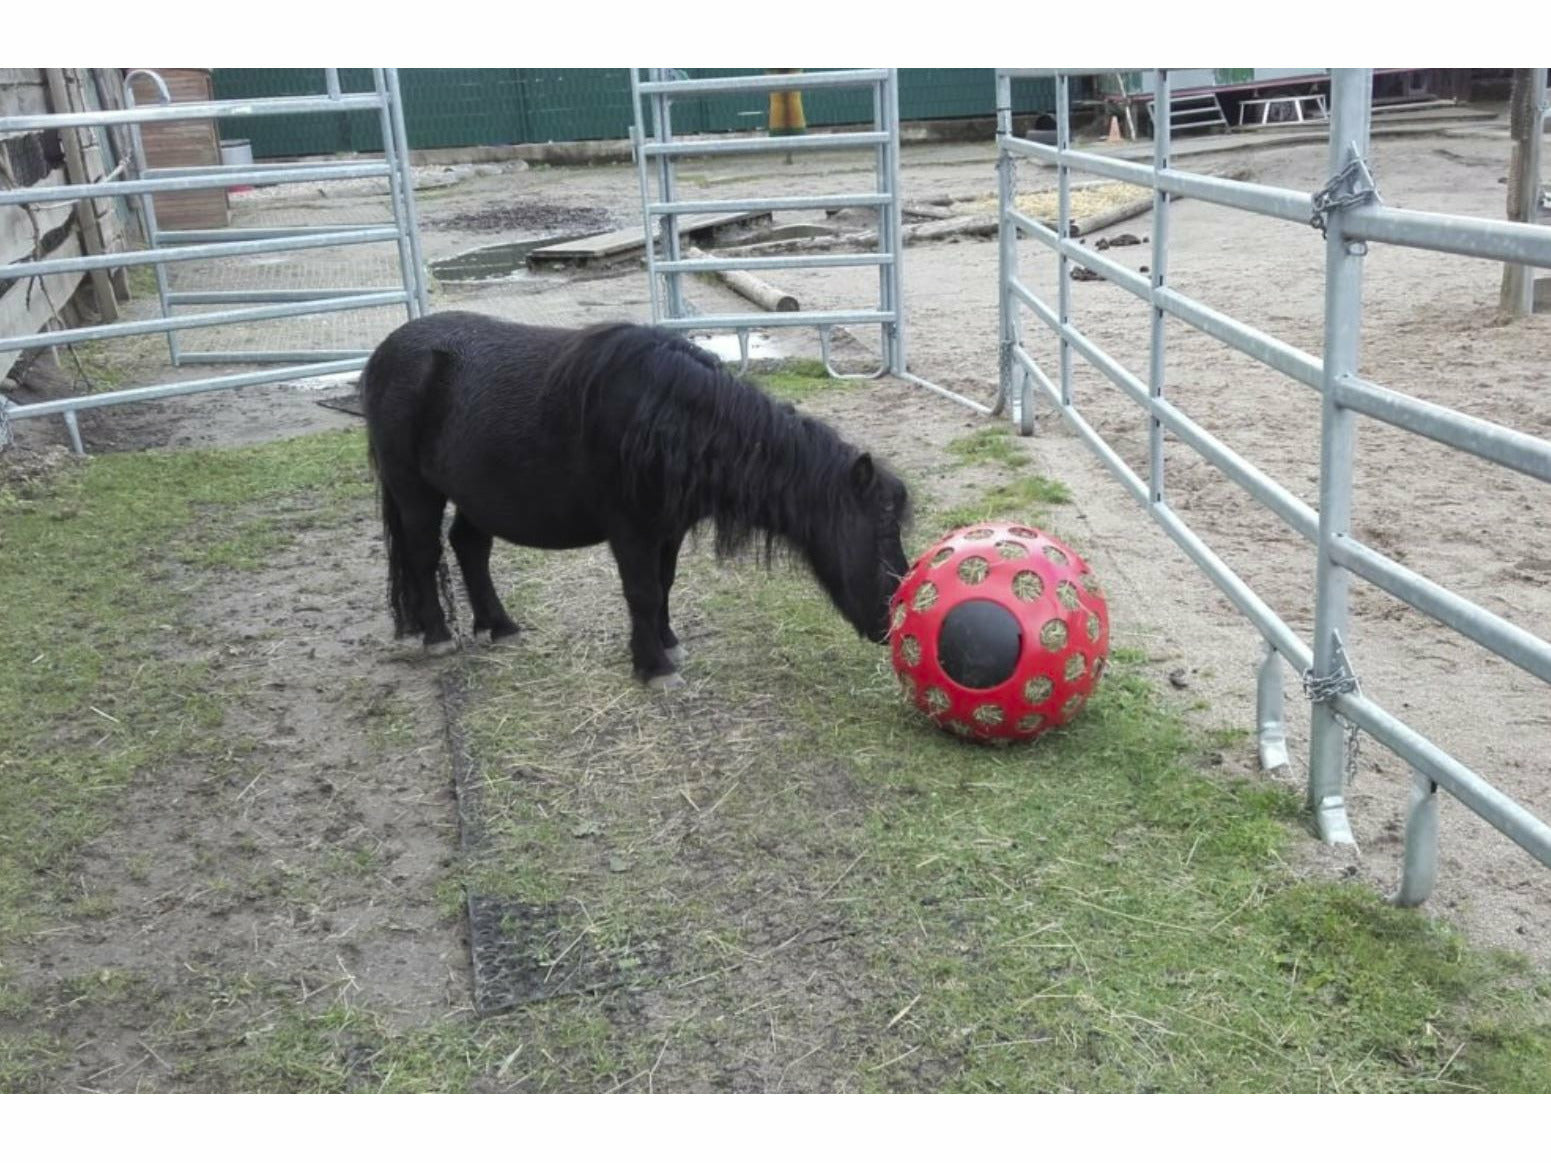 Icelandic Horse feed ball - hay ball